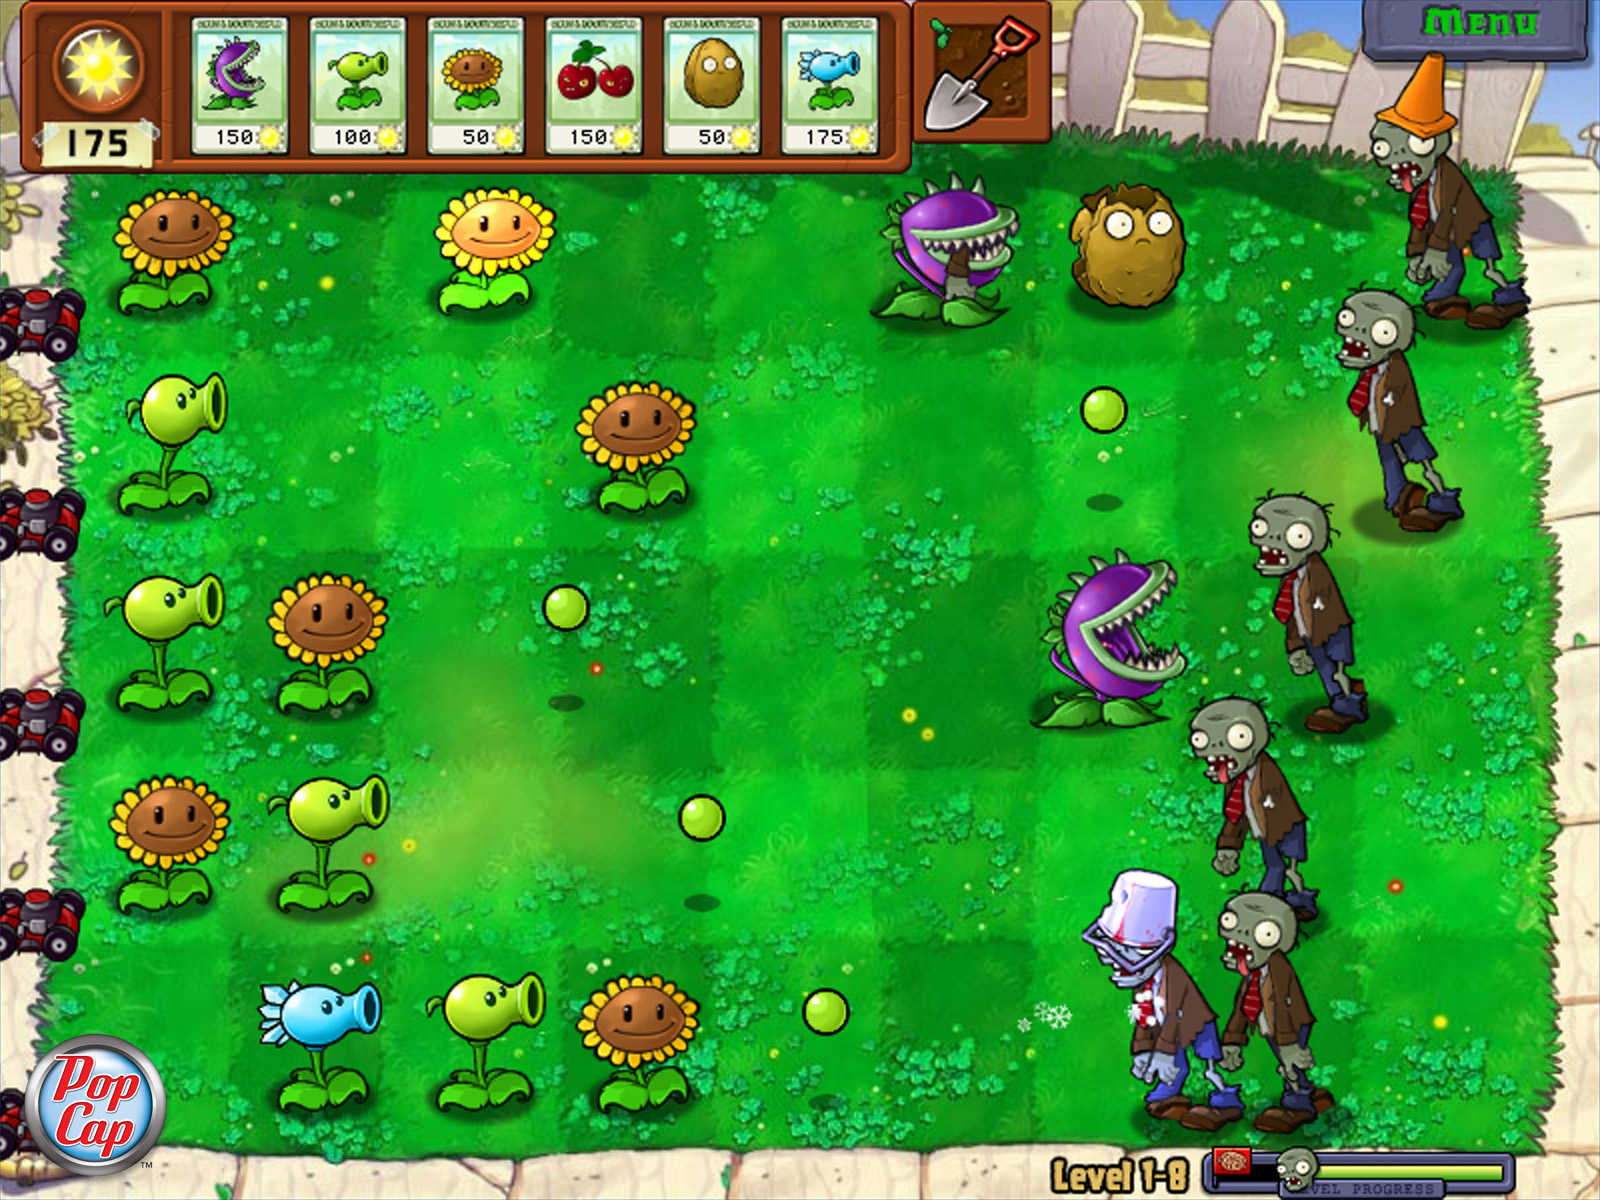 More Plants vs. Zombies